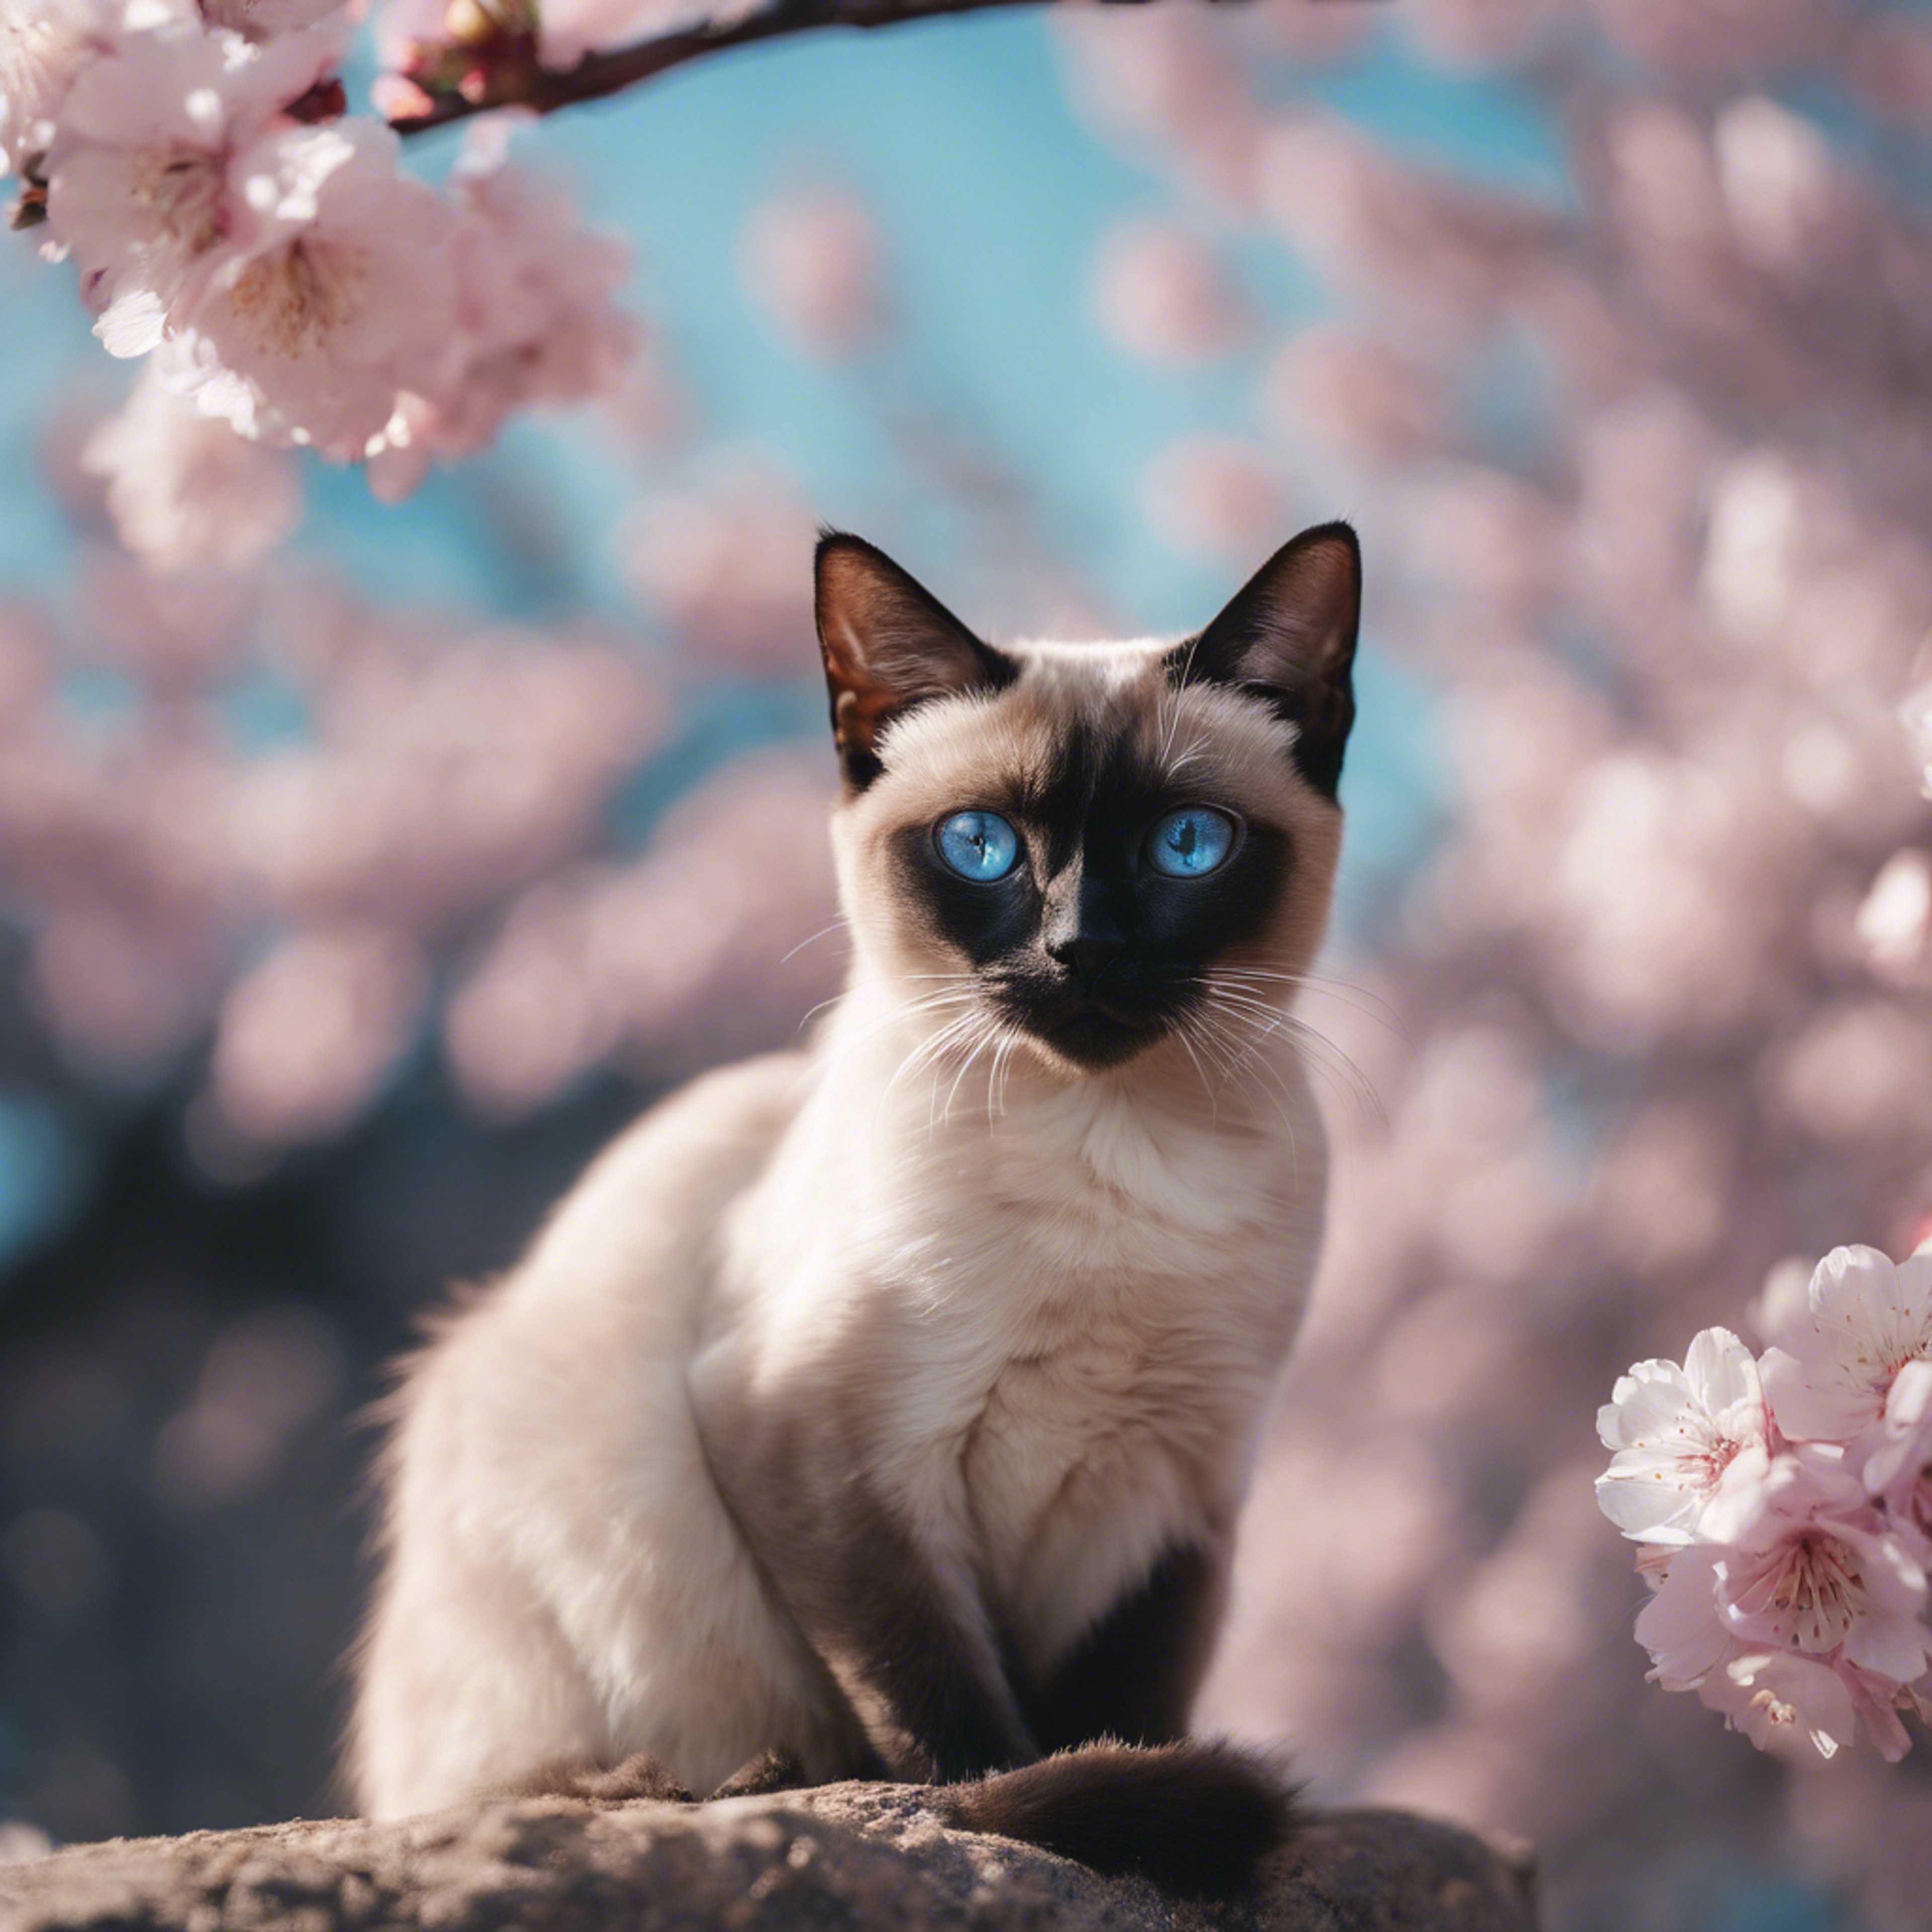 A romantic cherry blossom sky behind a Siamese cat's secretive spring rendezvous. Hintergrund[e1c3ed383d4d484ca370]